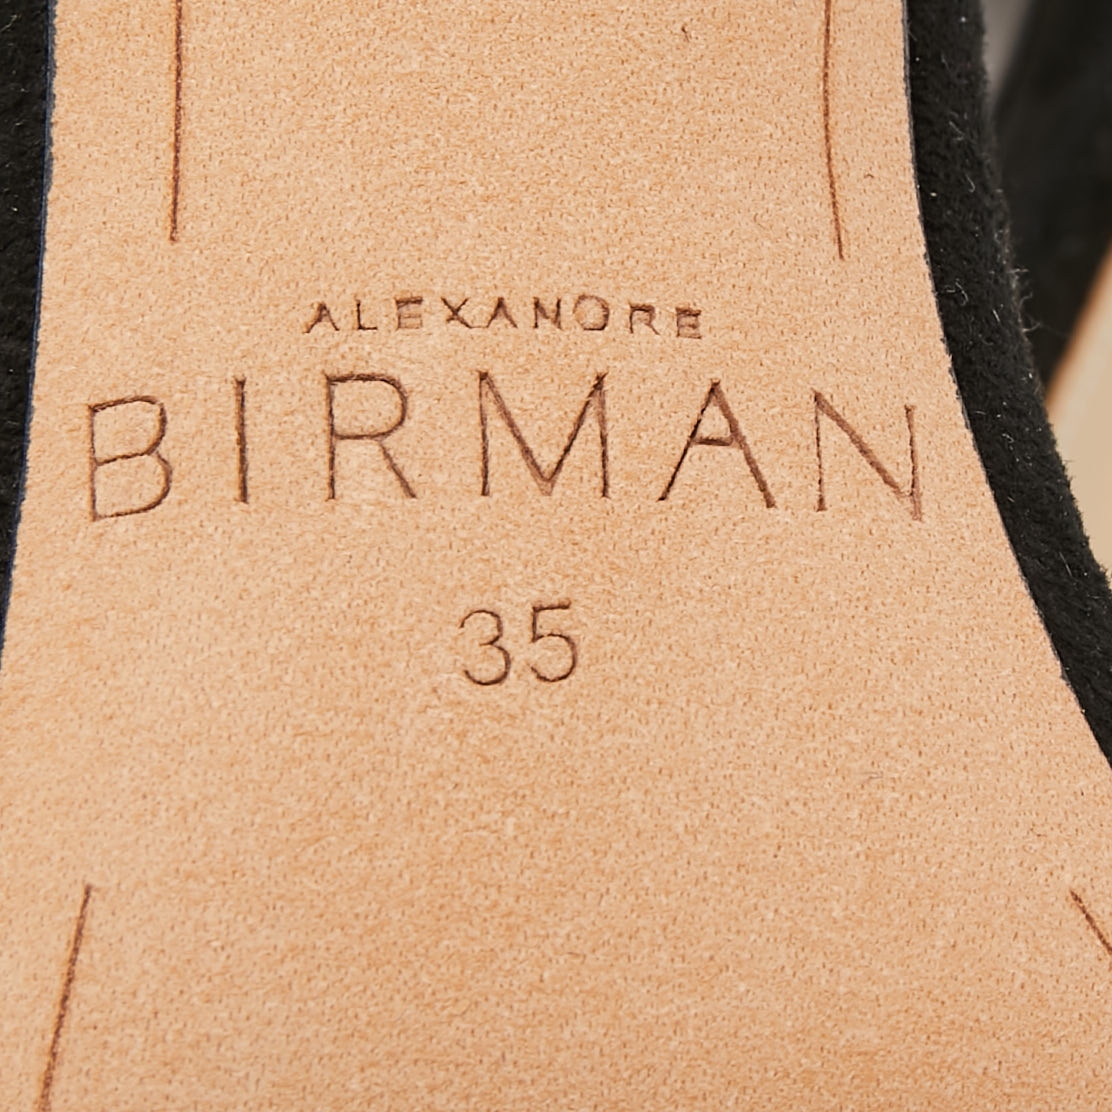 Alexandre Birman Black Suede Clarita Ankle Wrap Sandals Size 35